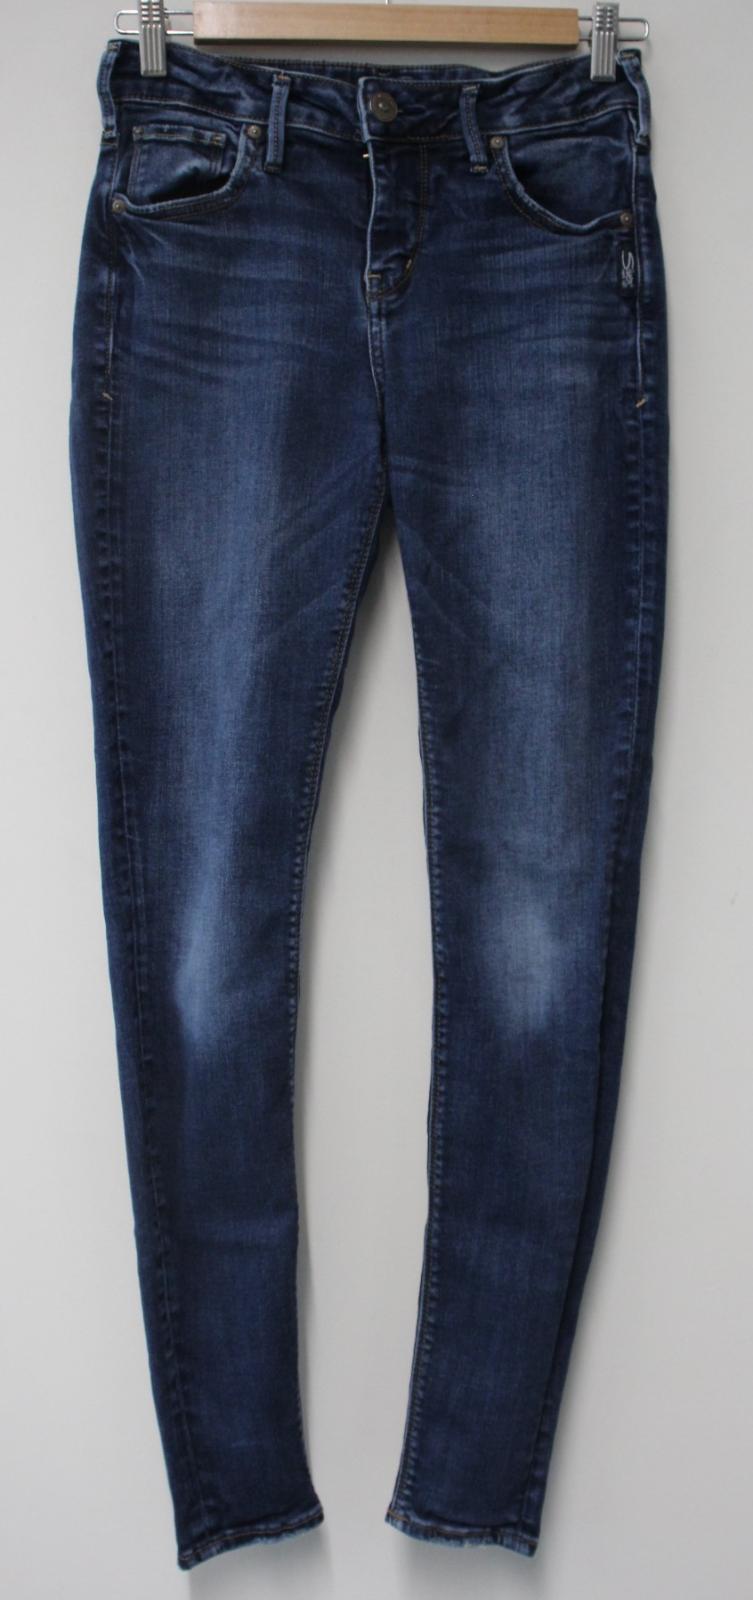 SILVER JEANS CO. Ladies Blue Cotton Blend Avery Super Skinny Leg Jeans W27 L31